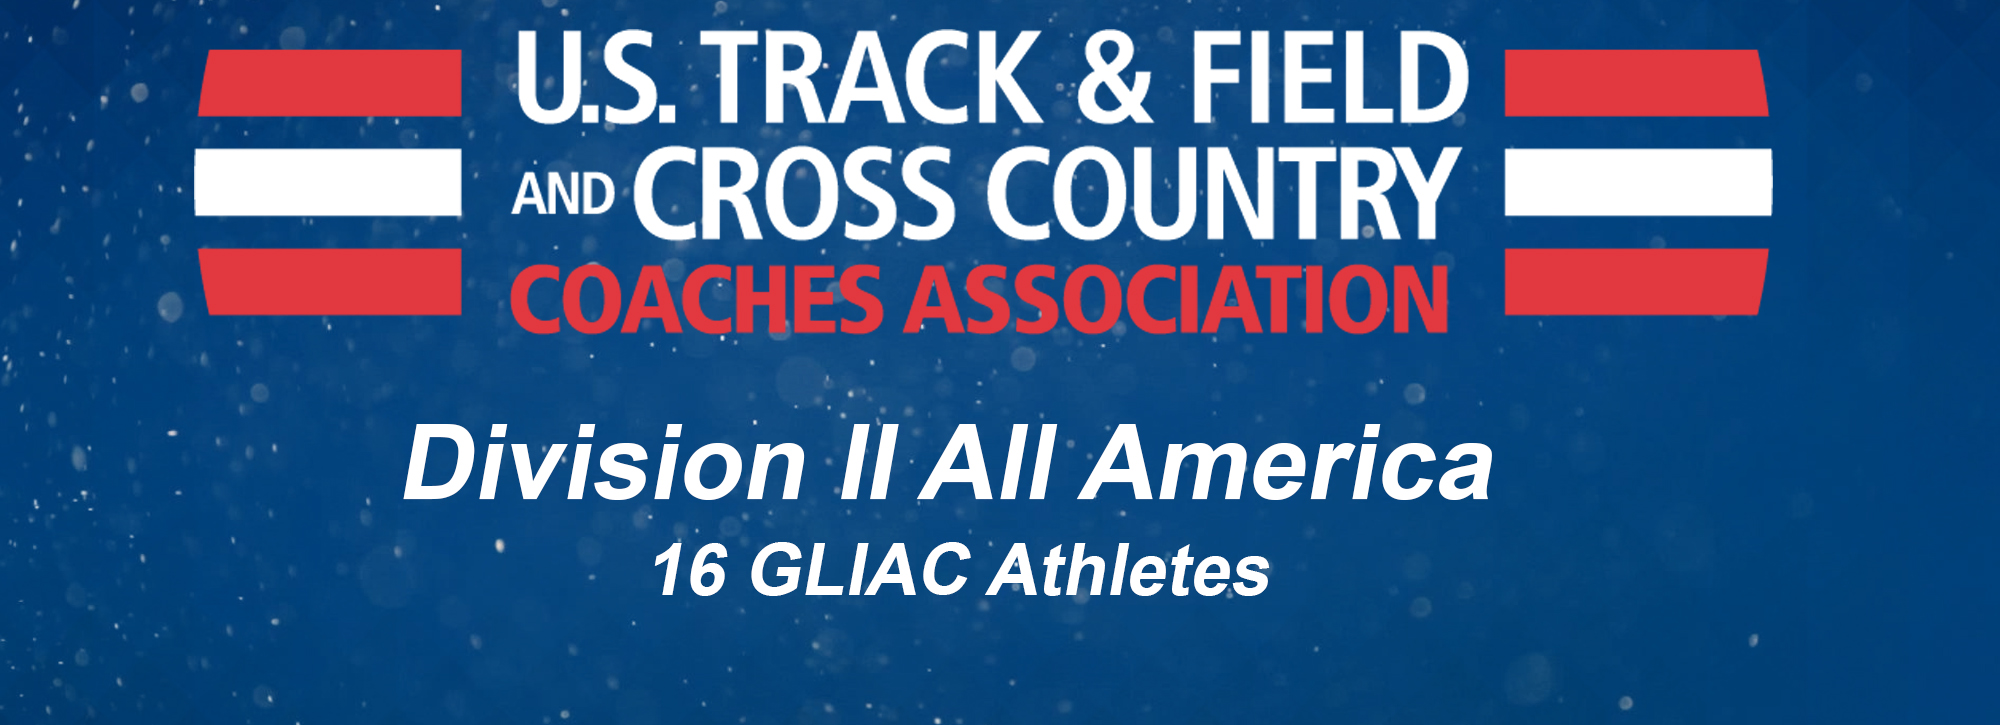 Sixteen GLIAC athletes earn USTFCCCA All-American honors